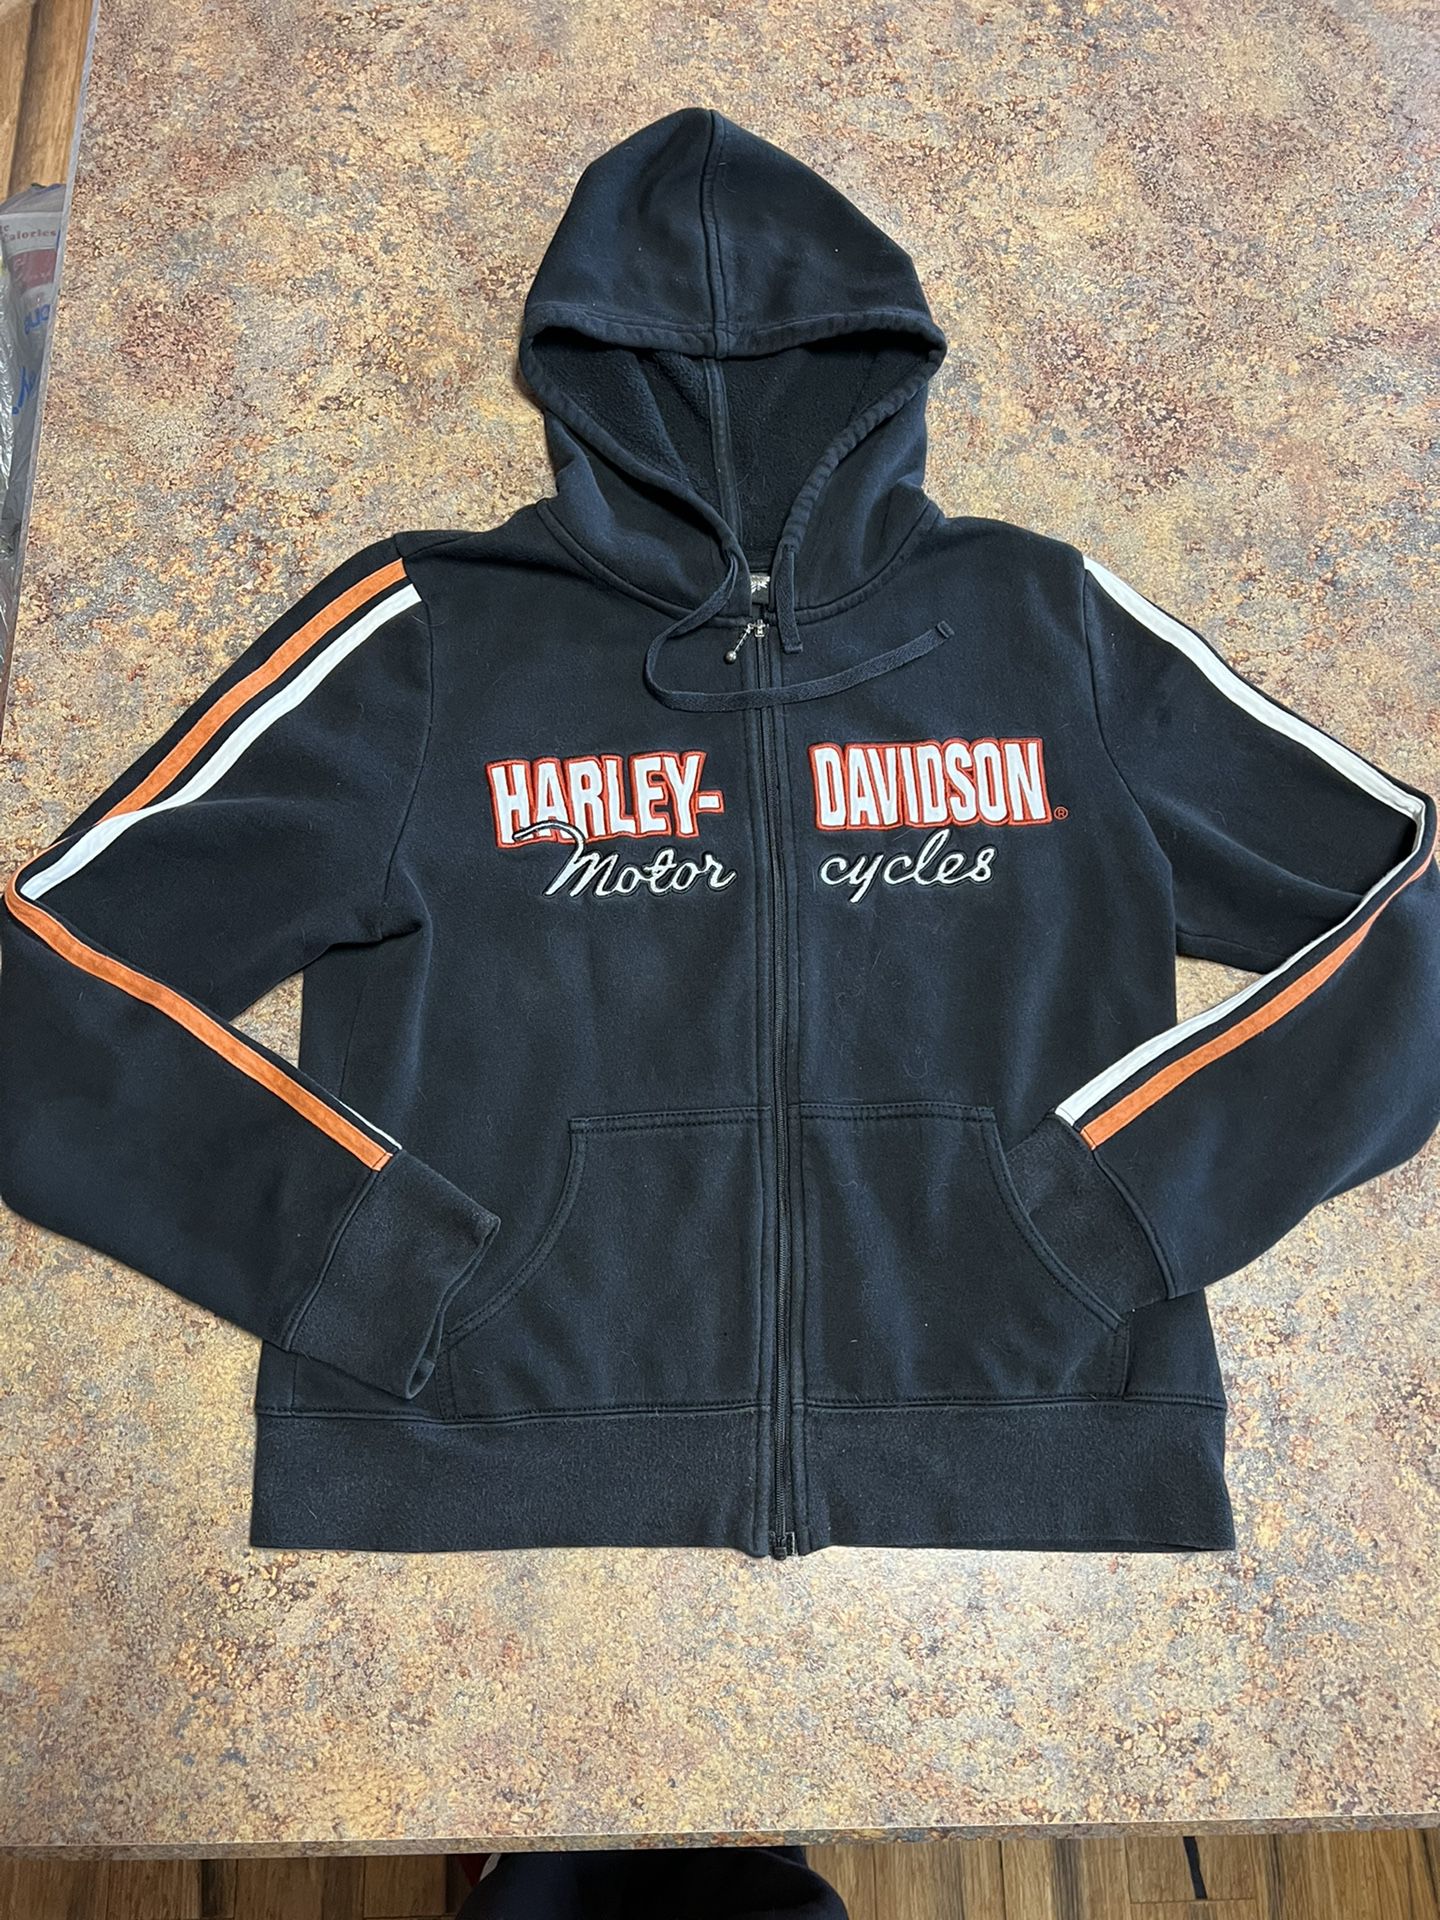 Woman’s Harley Davidson Sweatshirt Jacket